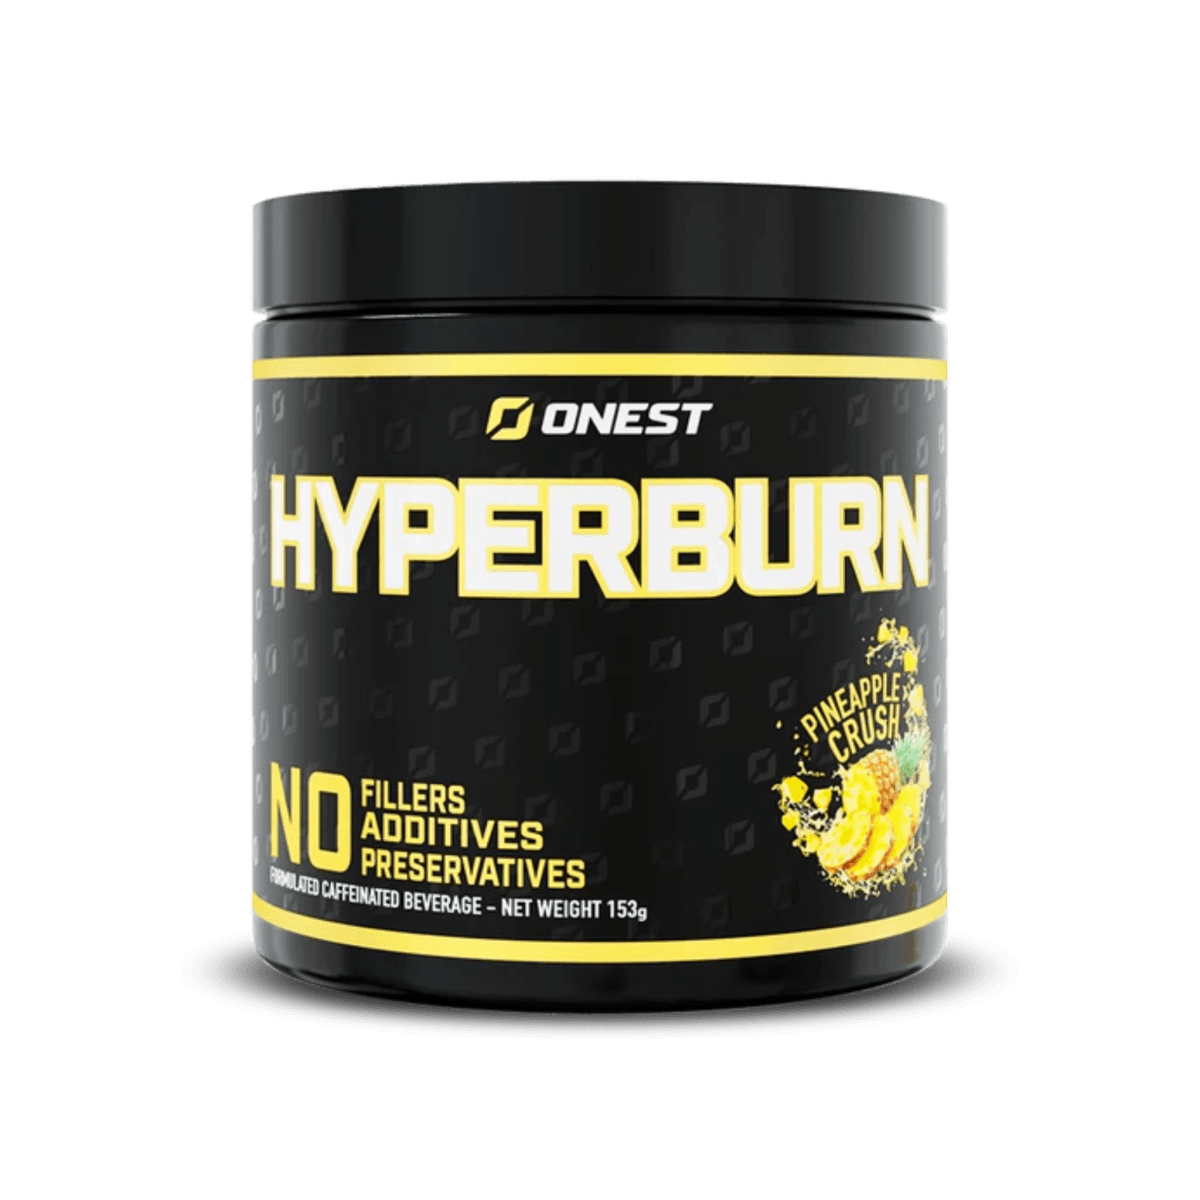 ONEST Hyperburn